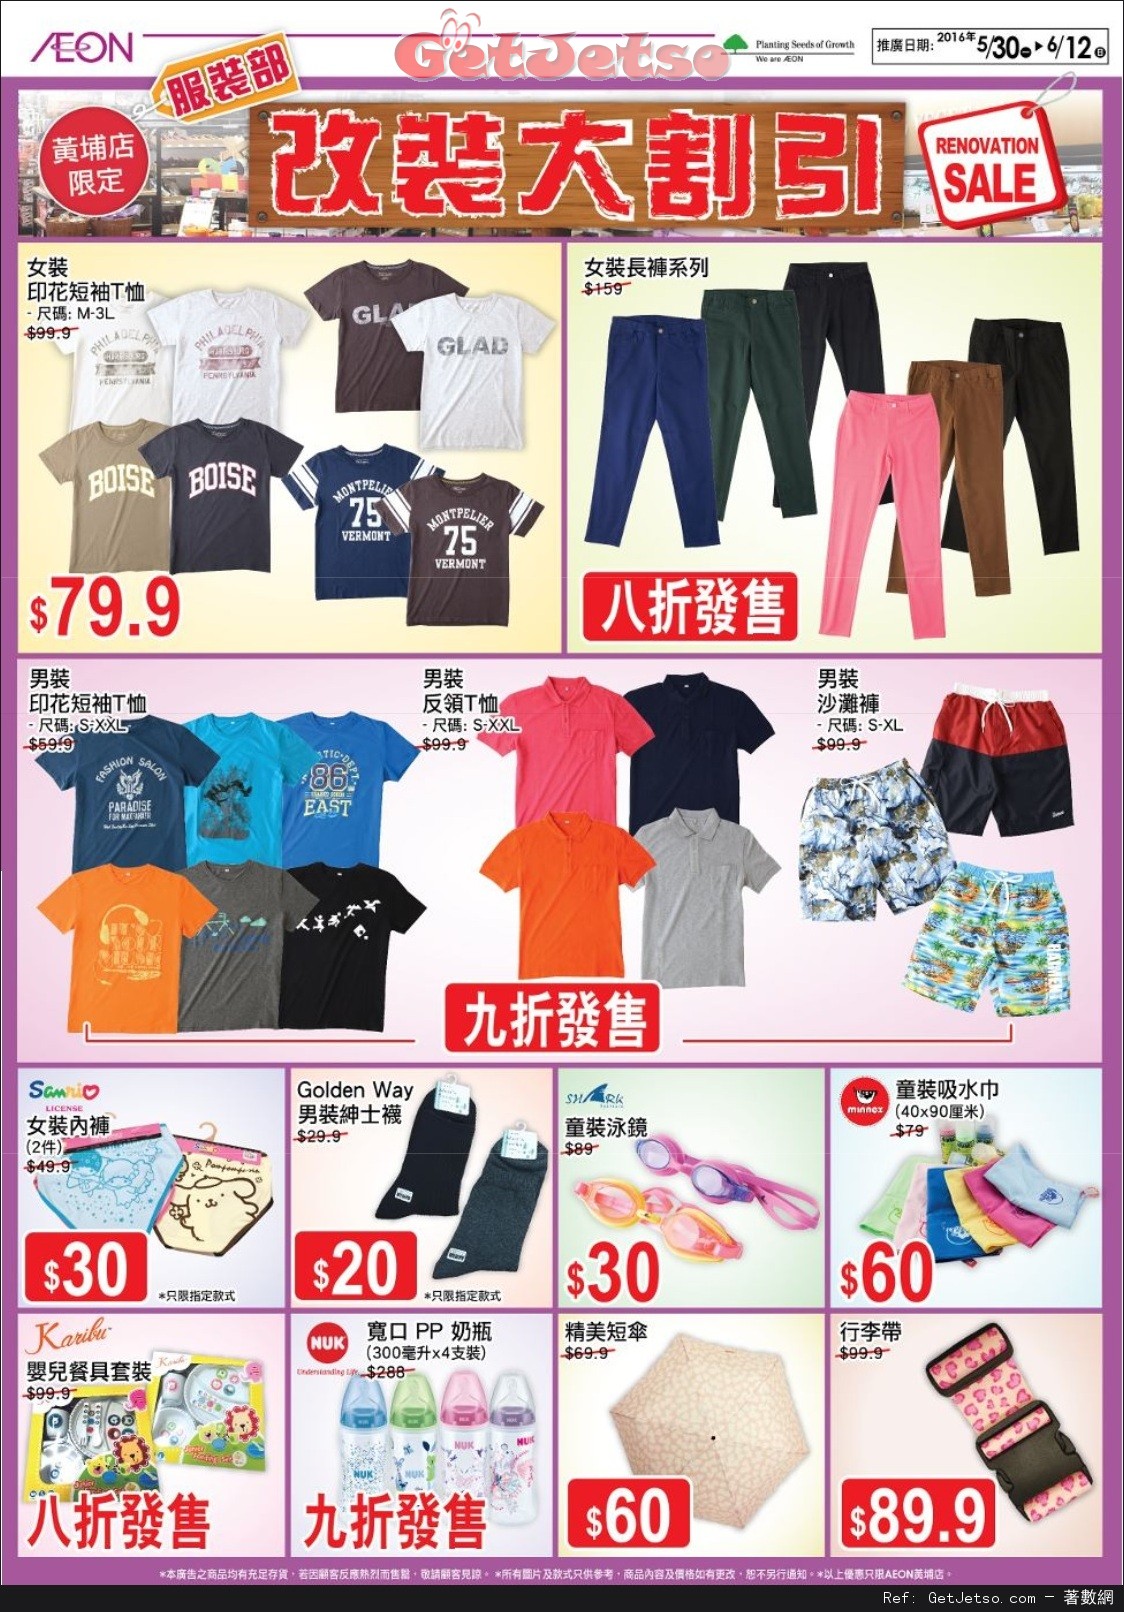 AEON 黃埔店改裝大割引購物優惠(至16年6月12日)圖片2